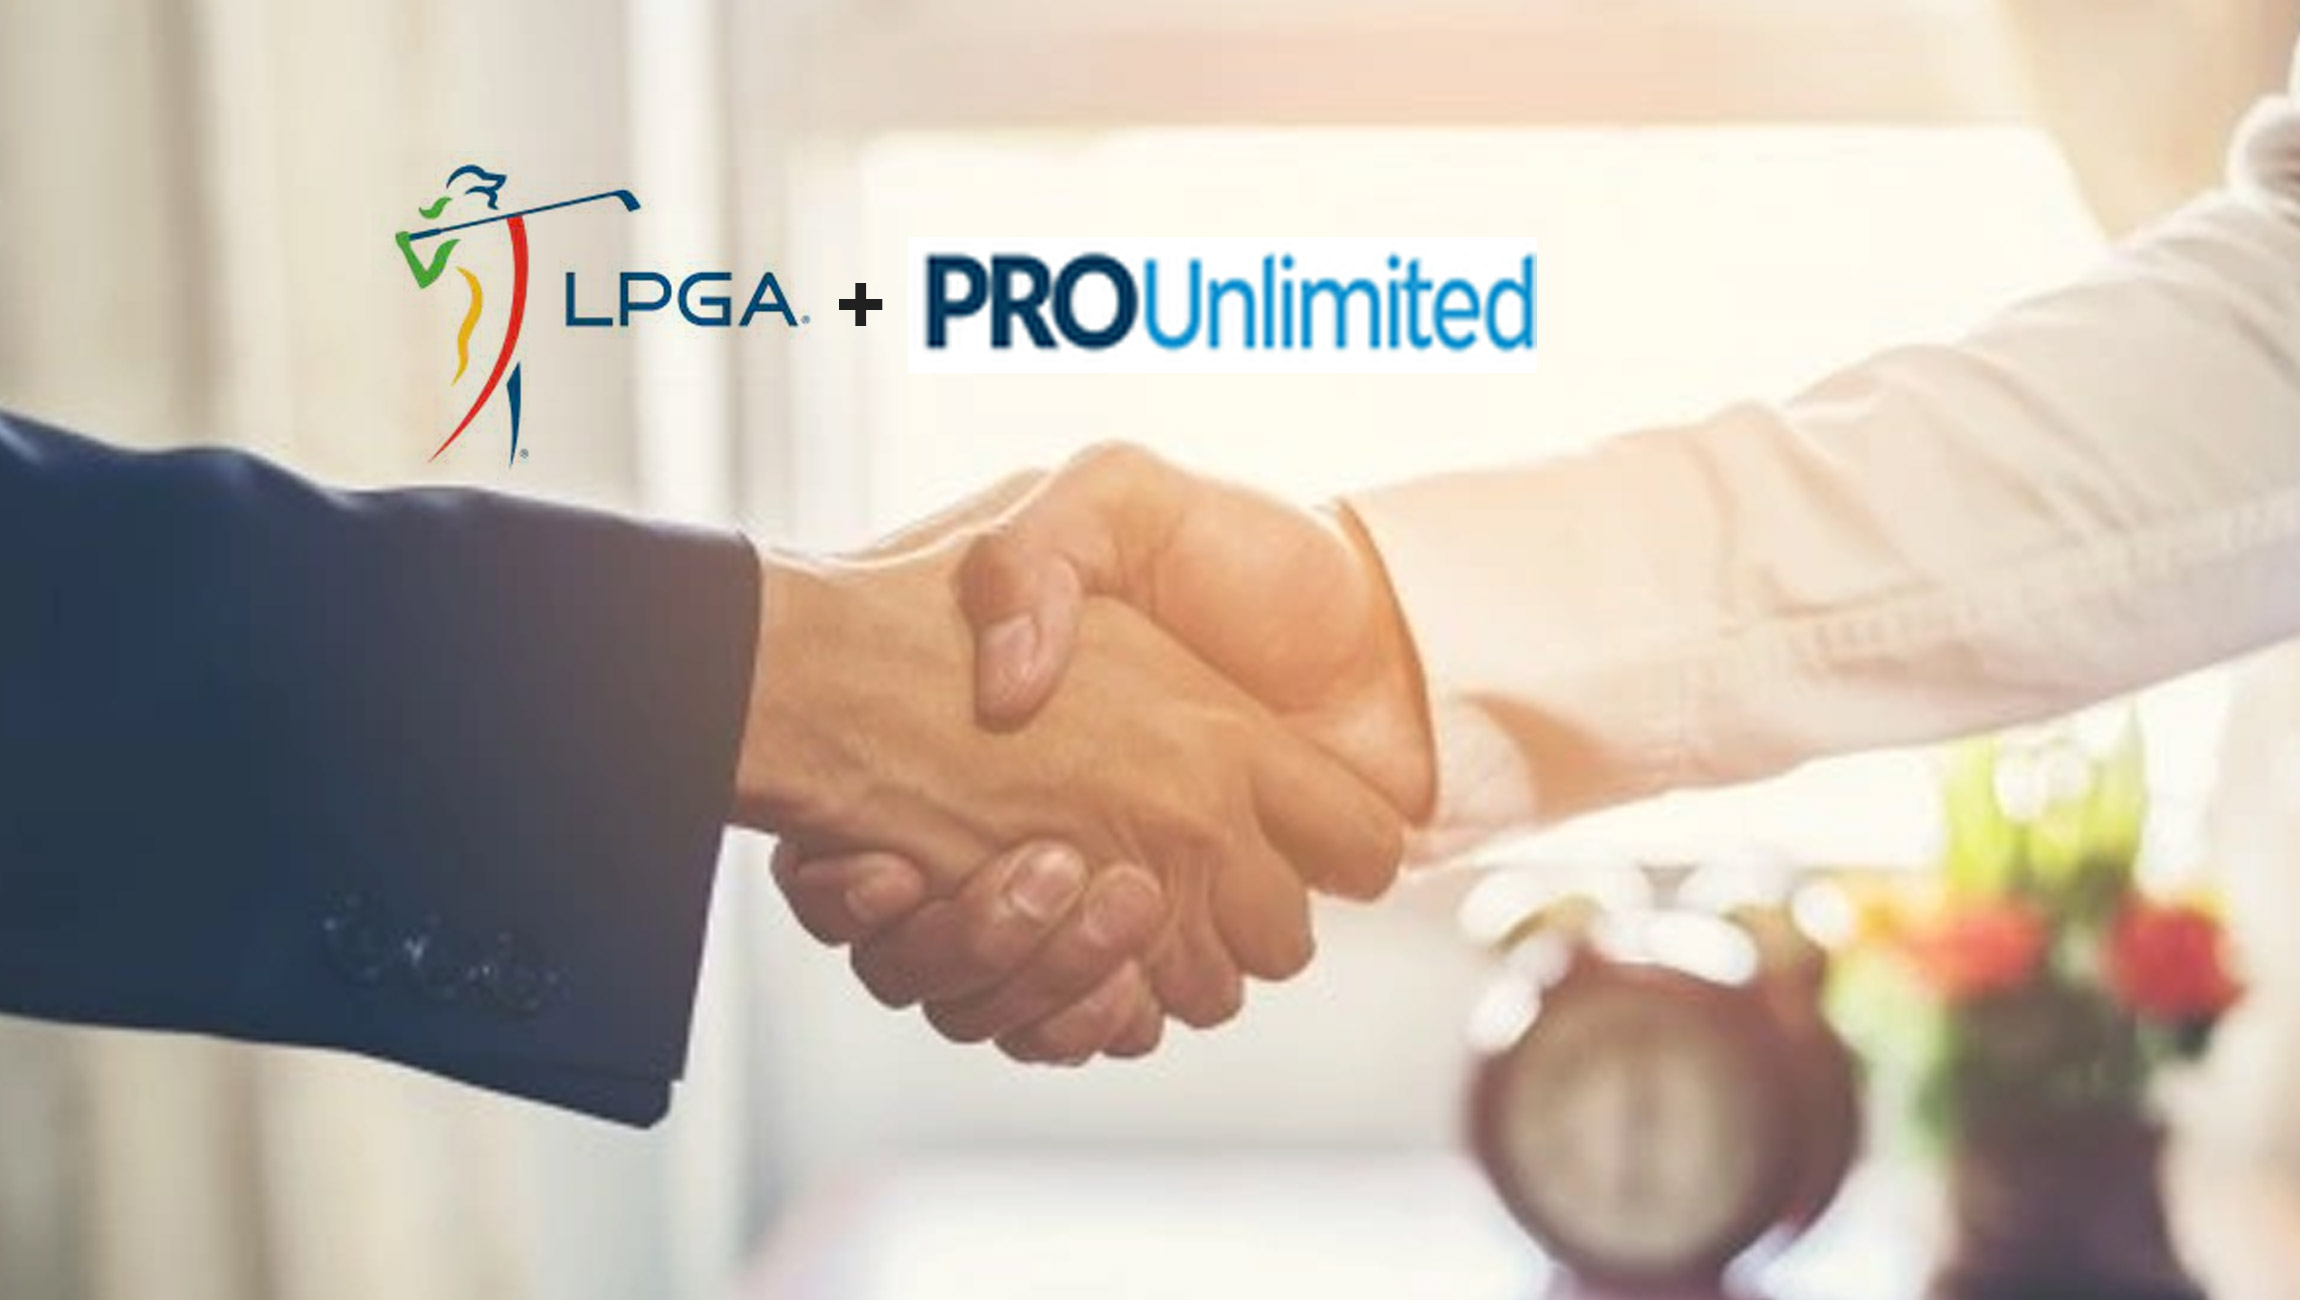 LPGA Star Jessica Korda Tees Up Partnership with PRO Unlimited